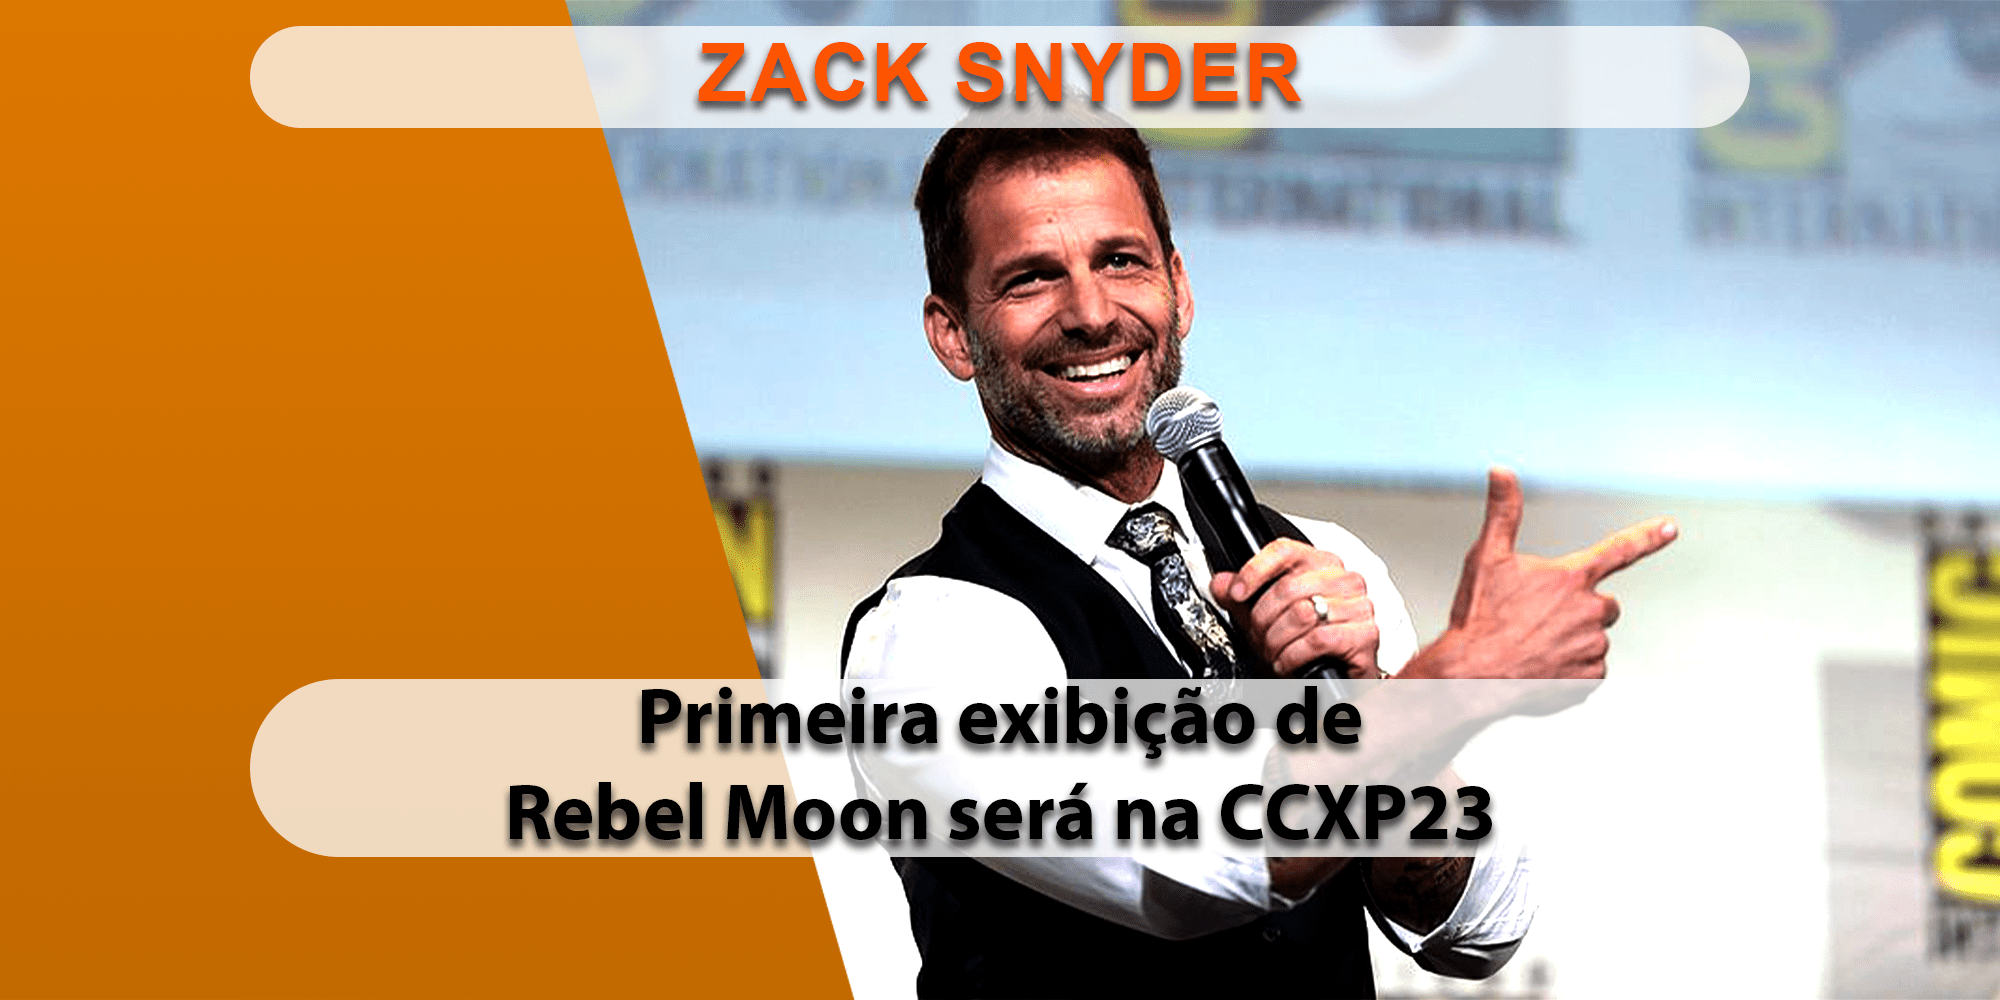 Rebel Moon' de Zack Snyder ganha vida no estande imersivo da CCXP